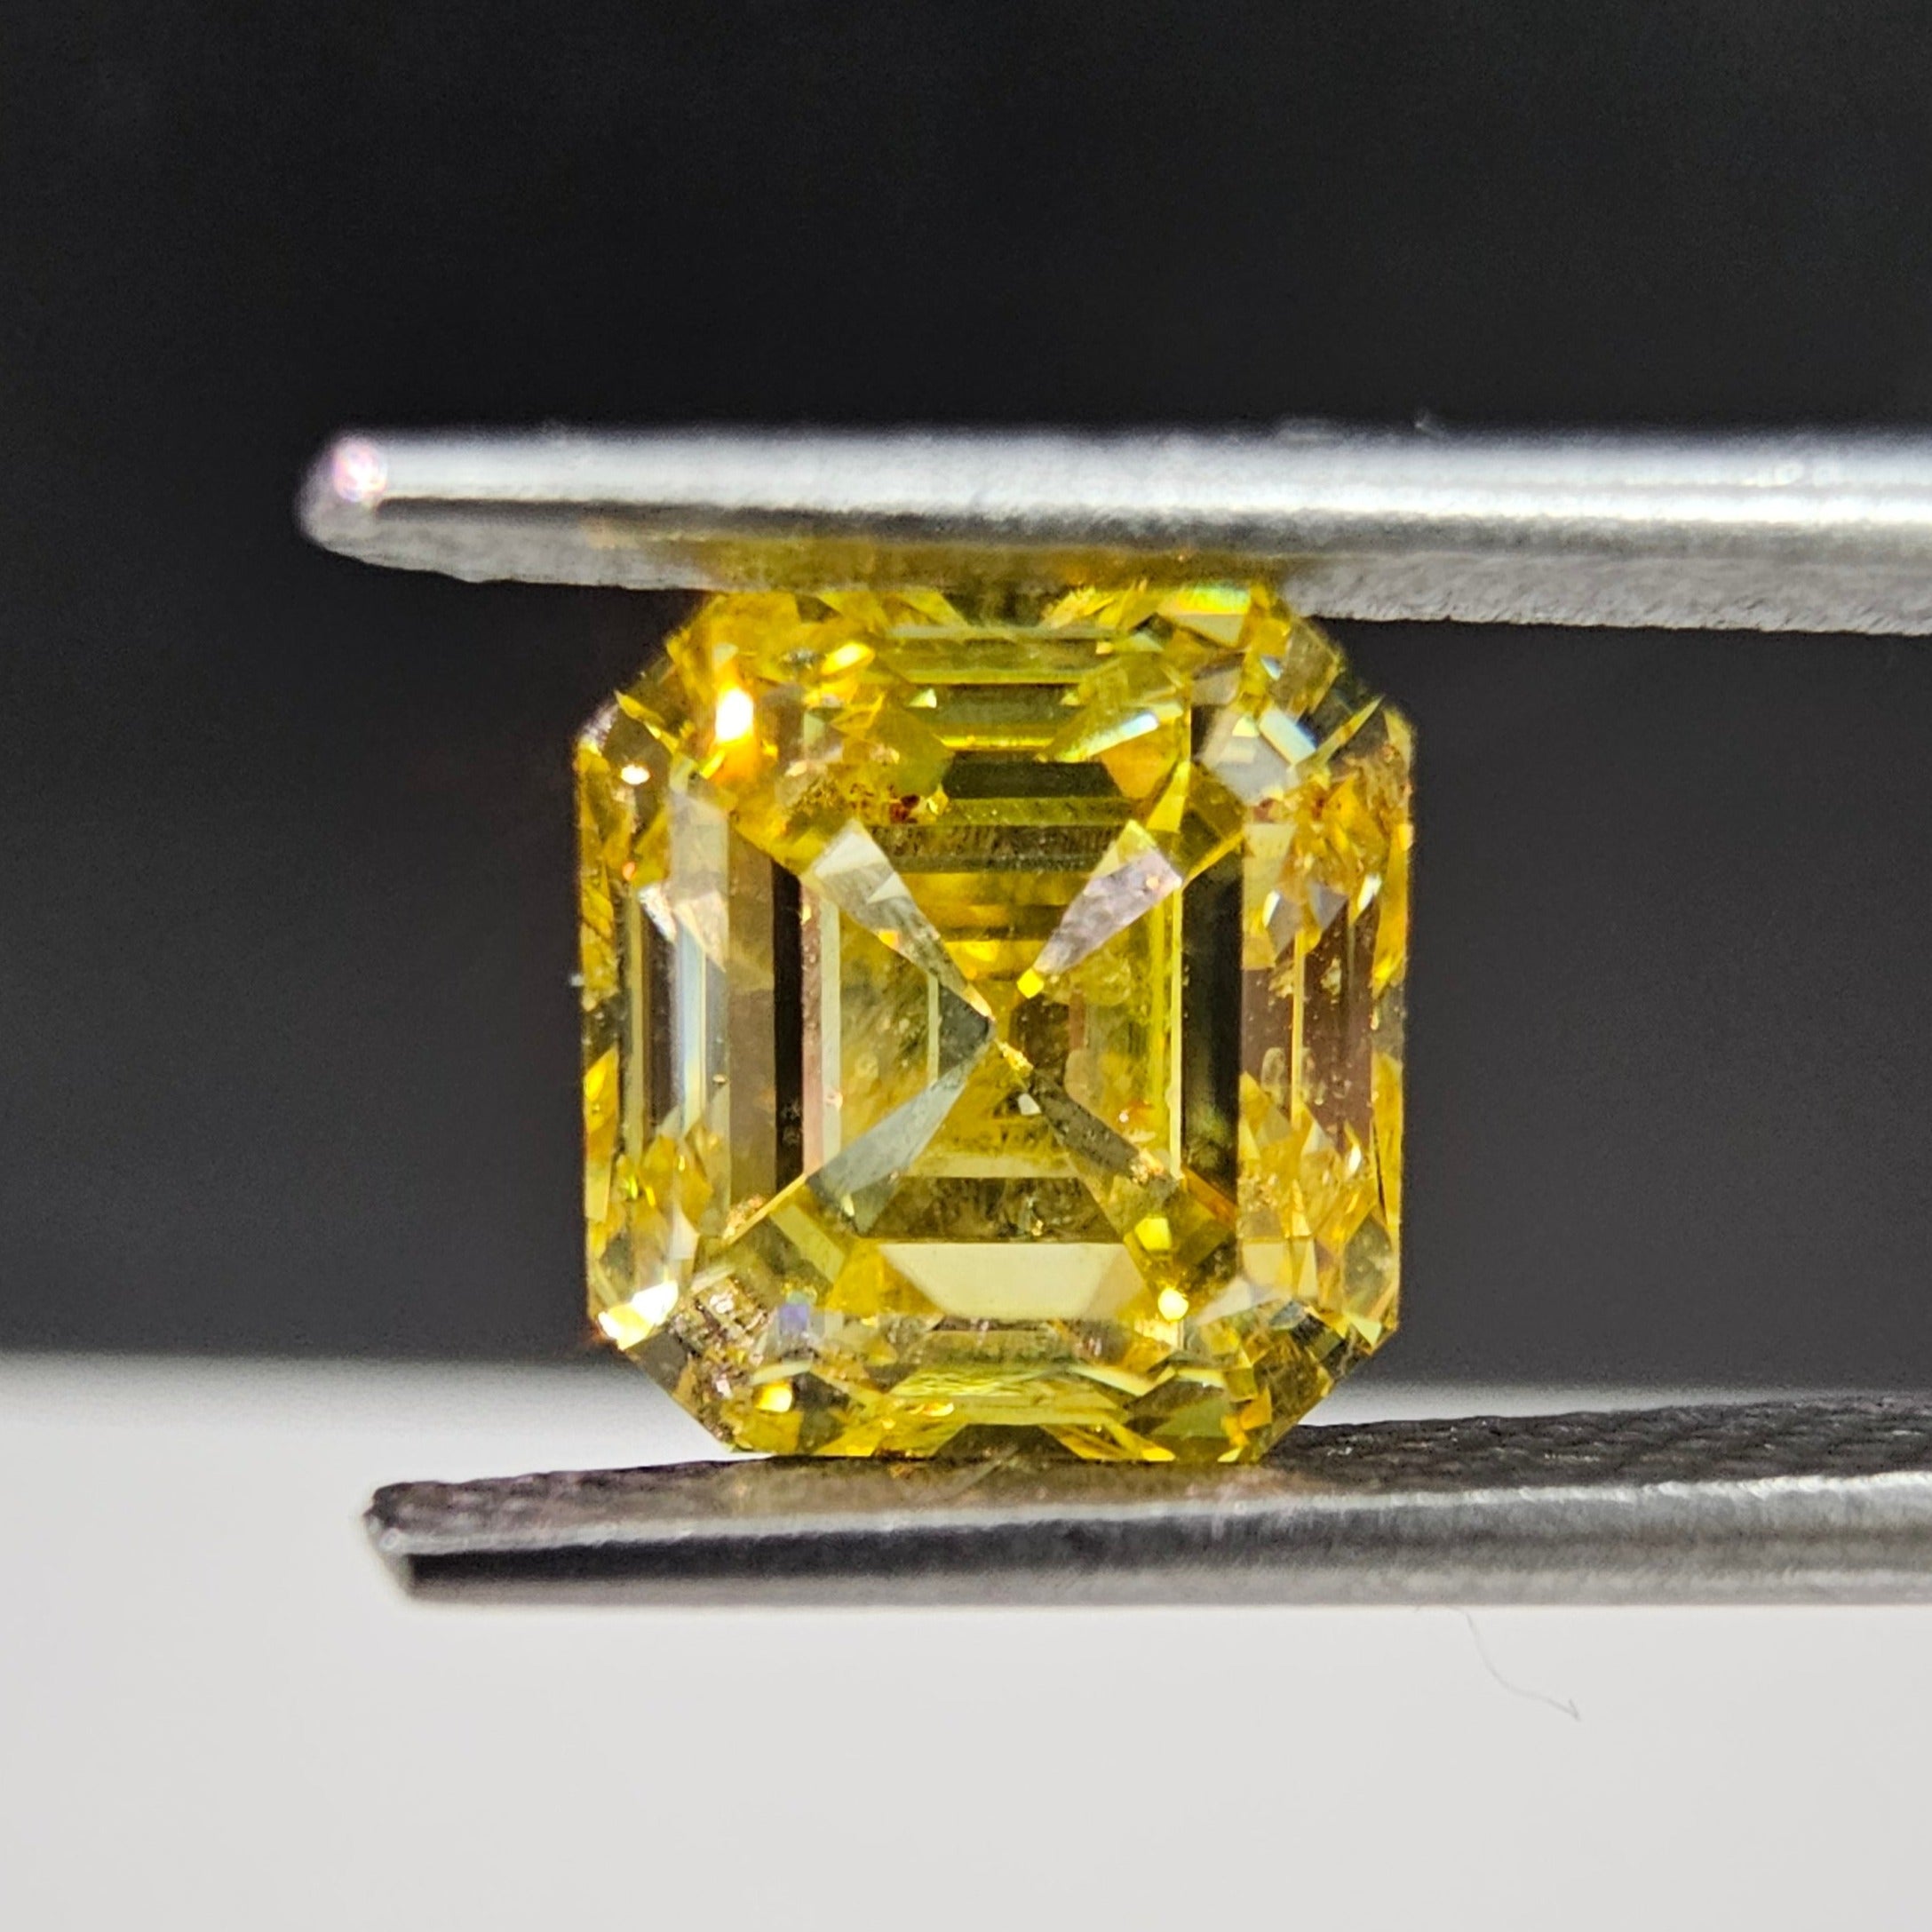 1.53ct GIA Fancy Vivid Yellow Asscher Cut Diamond - Loose